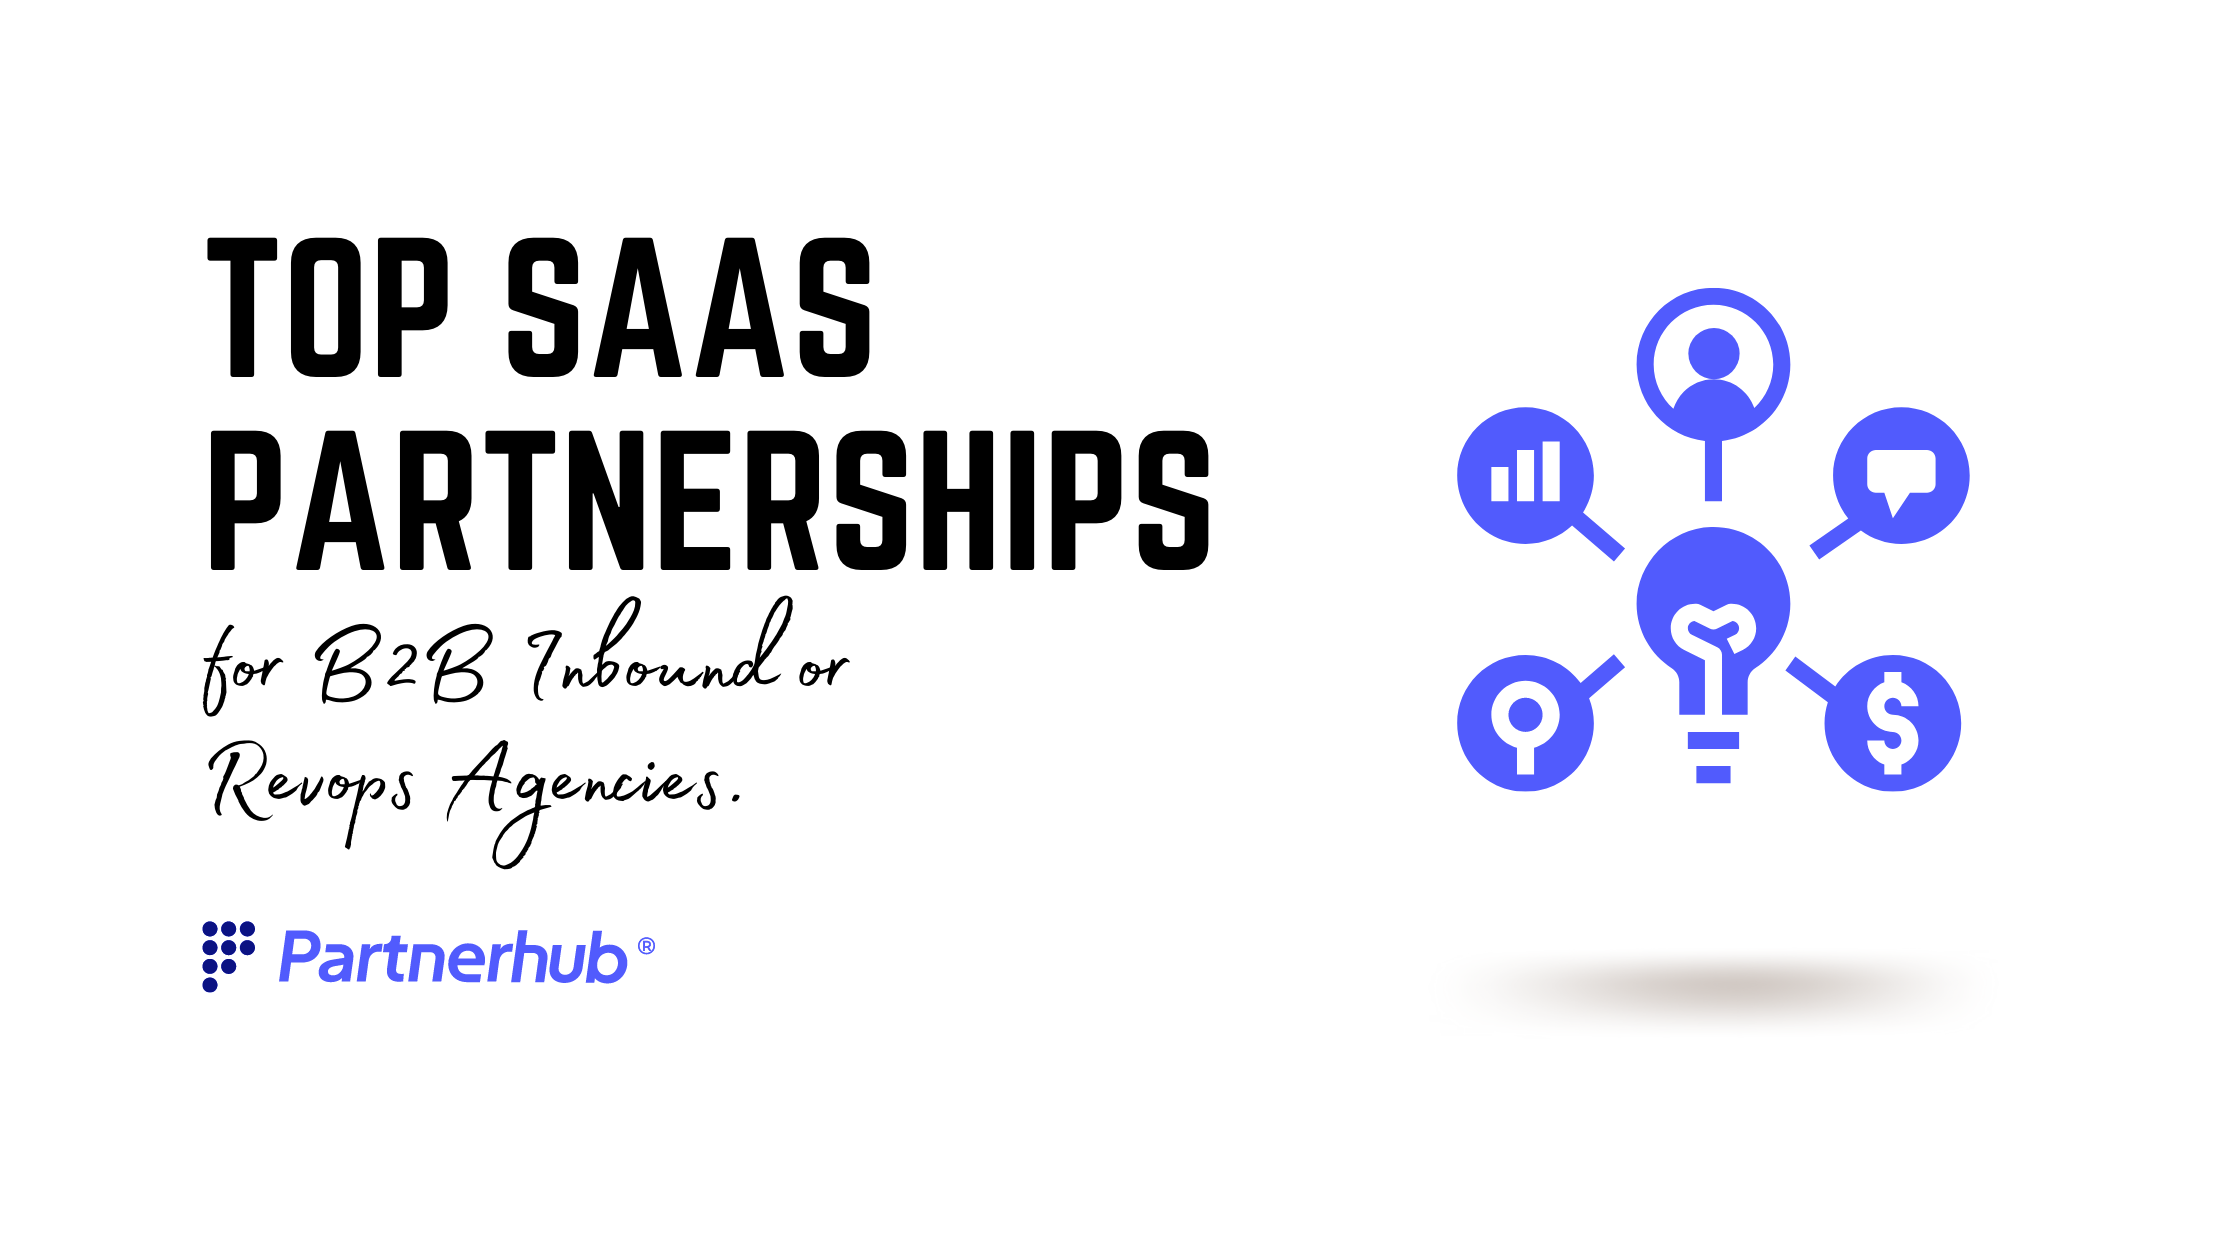 The Top SaaS Partnerships for B2B Inbound or Revops Agencies